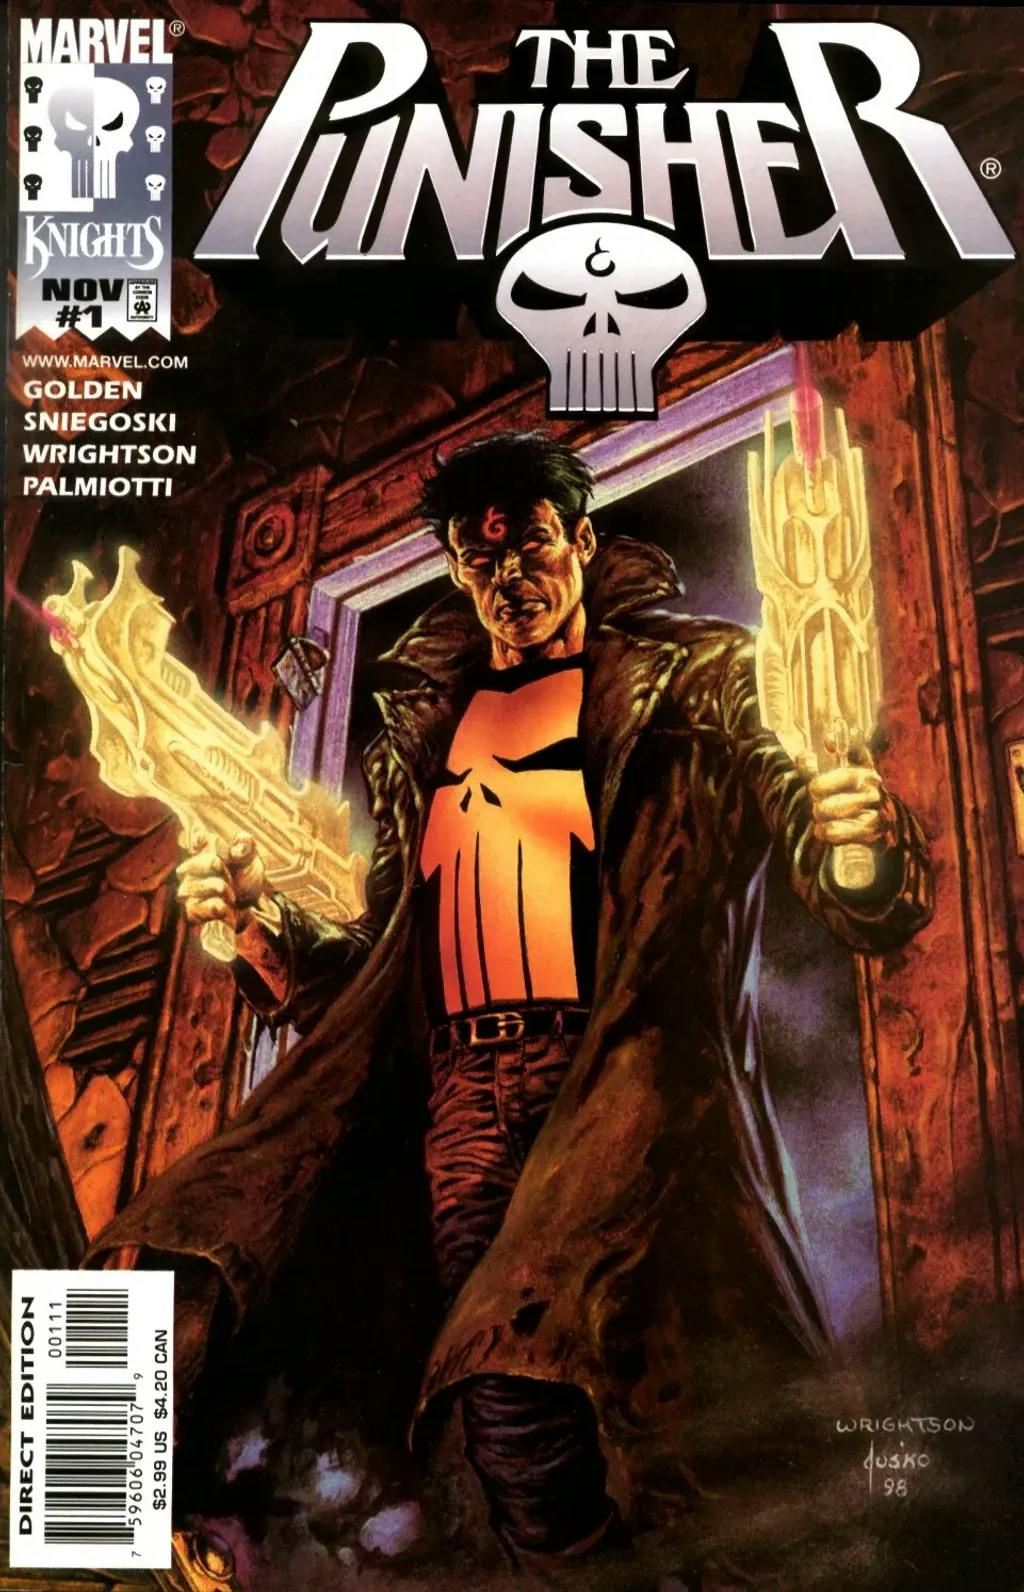 The Punisher #1 by Christopher Golden, Tom Sniegoski, Bernie Wrightson